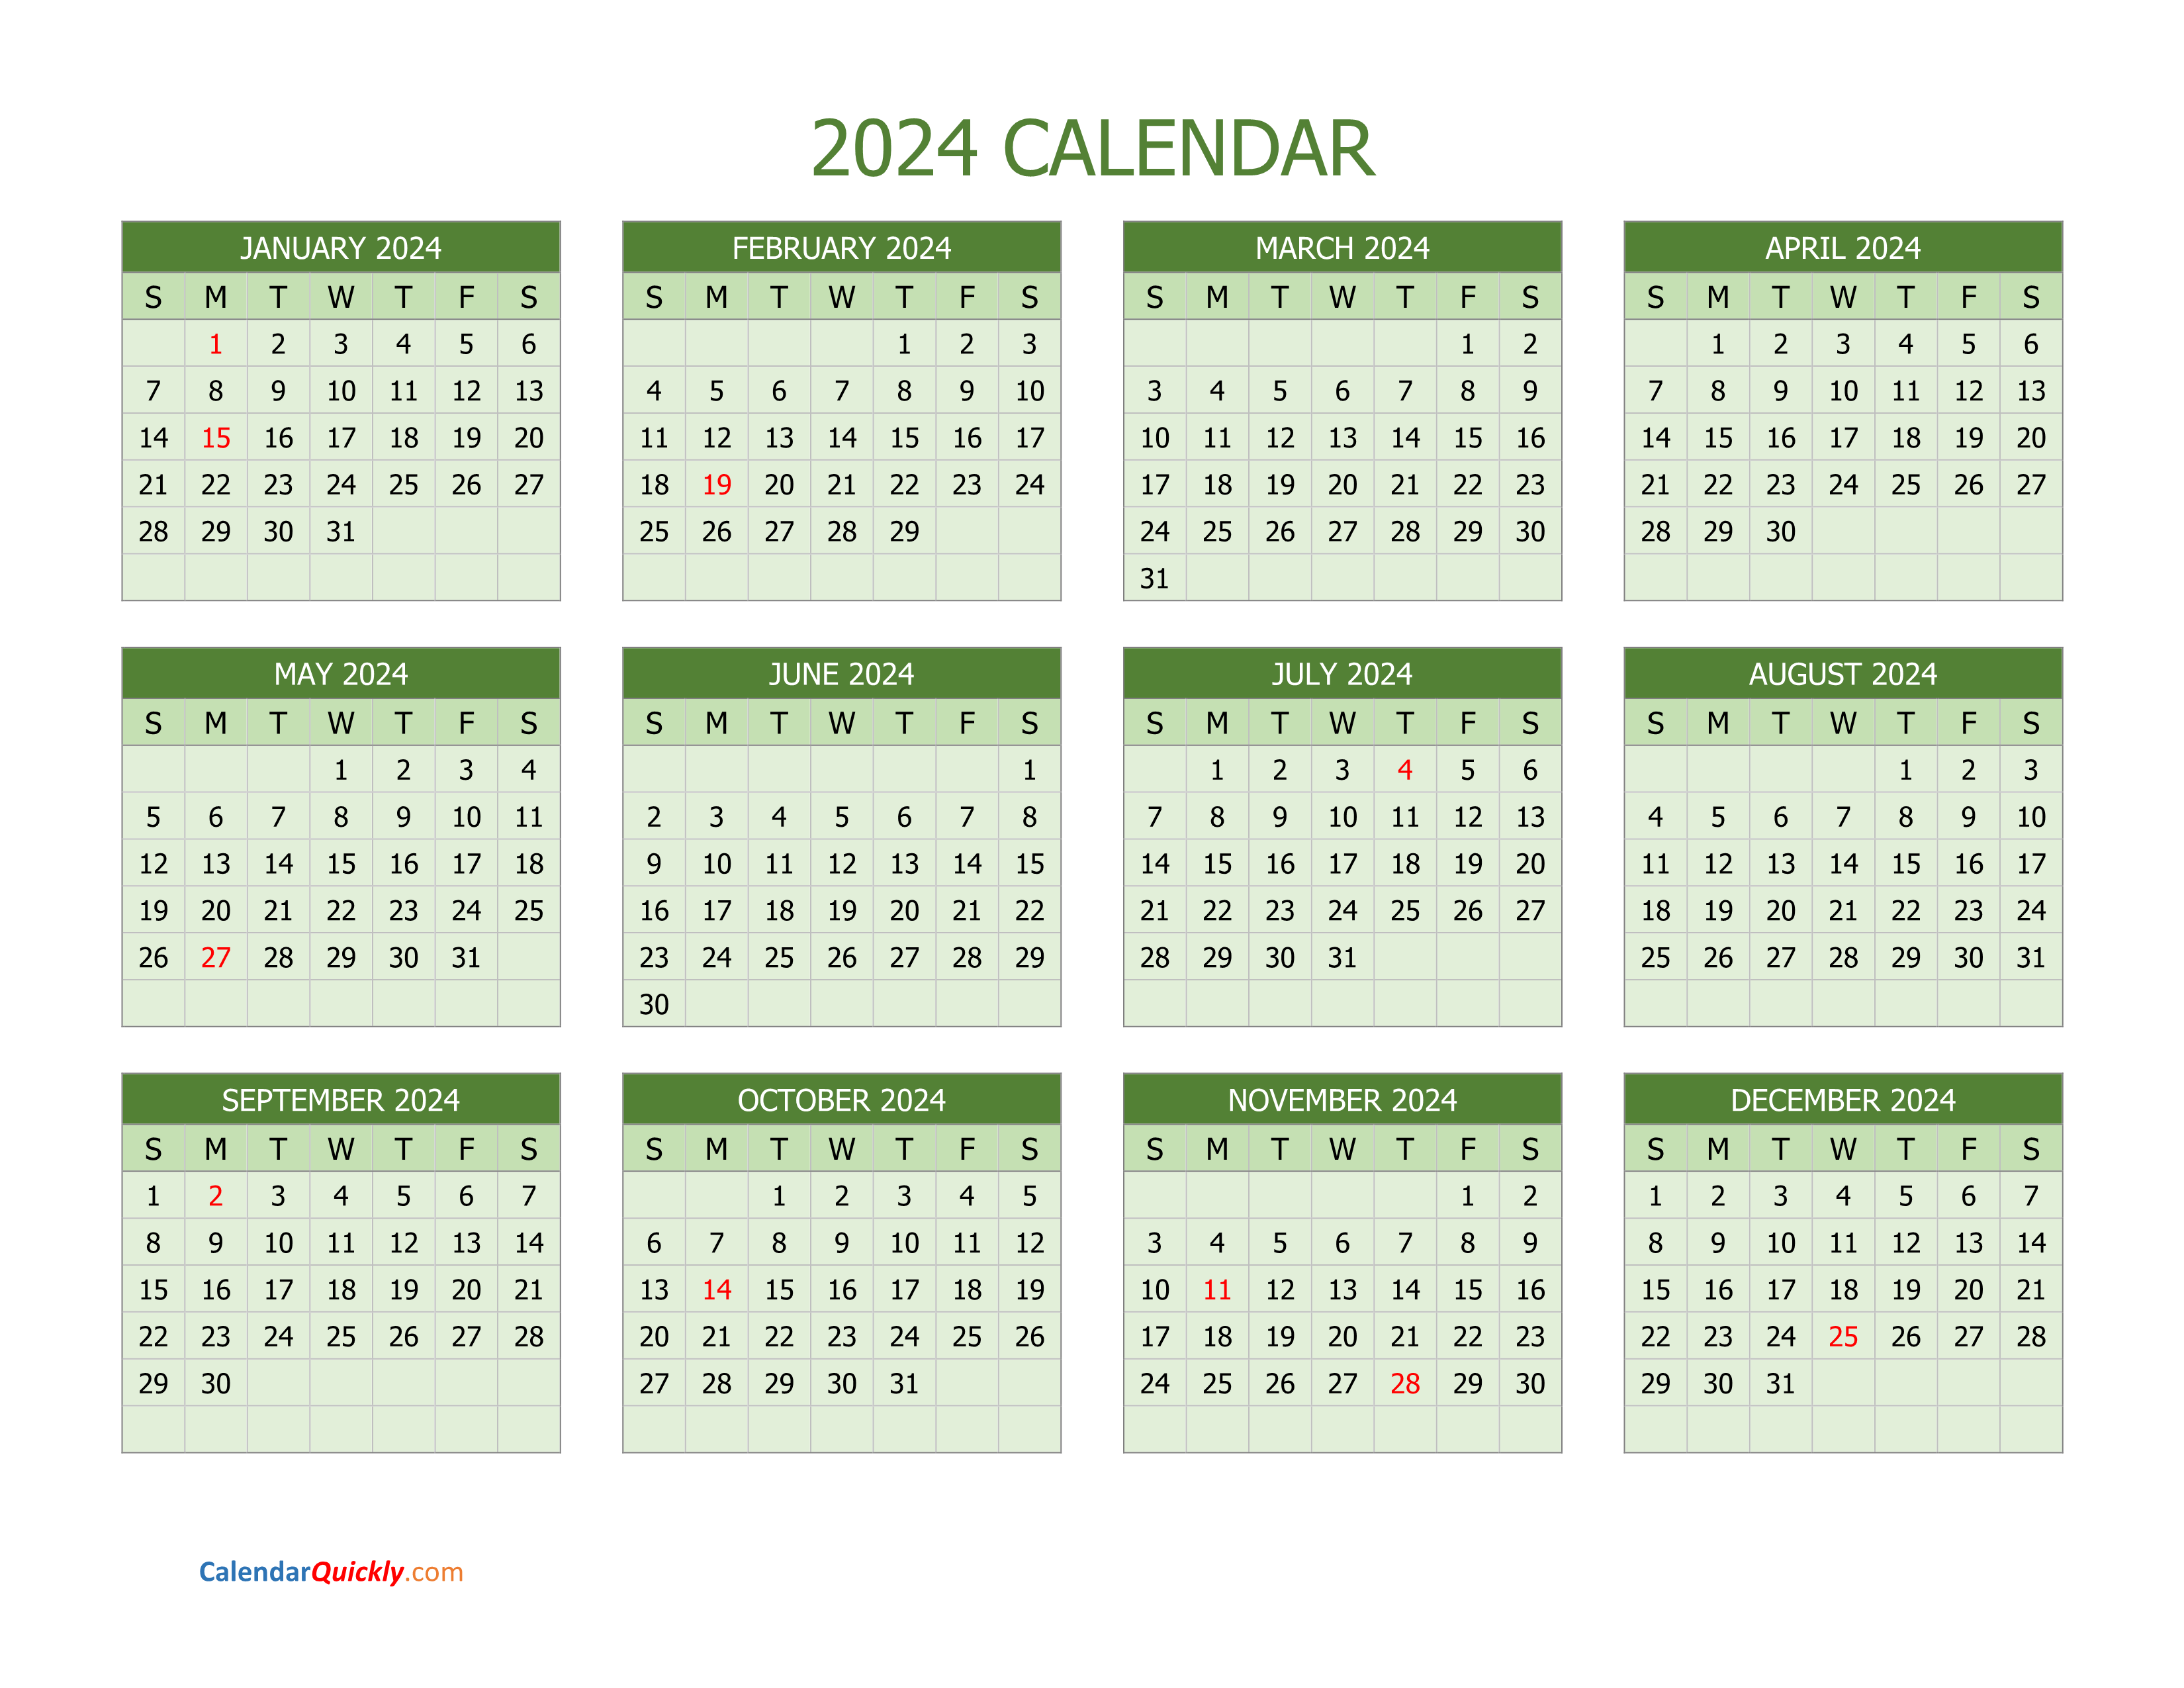 Yearly Calendar 2024 | Calendar Quickly